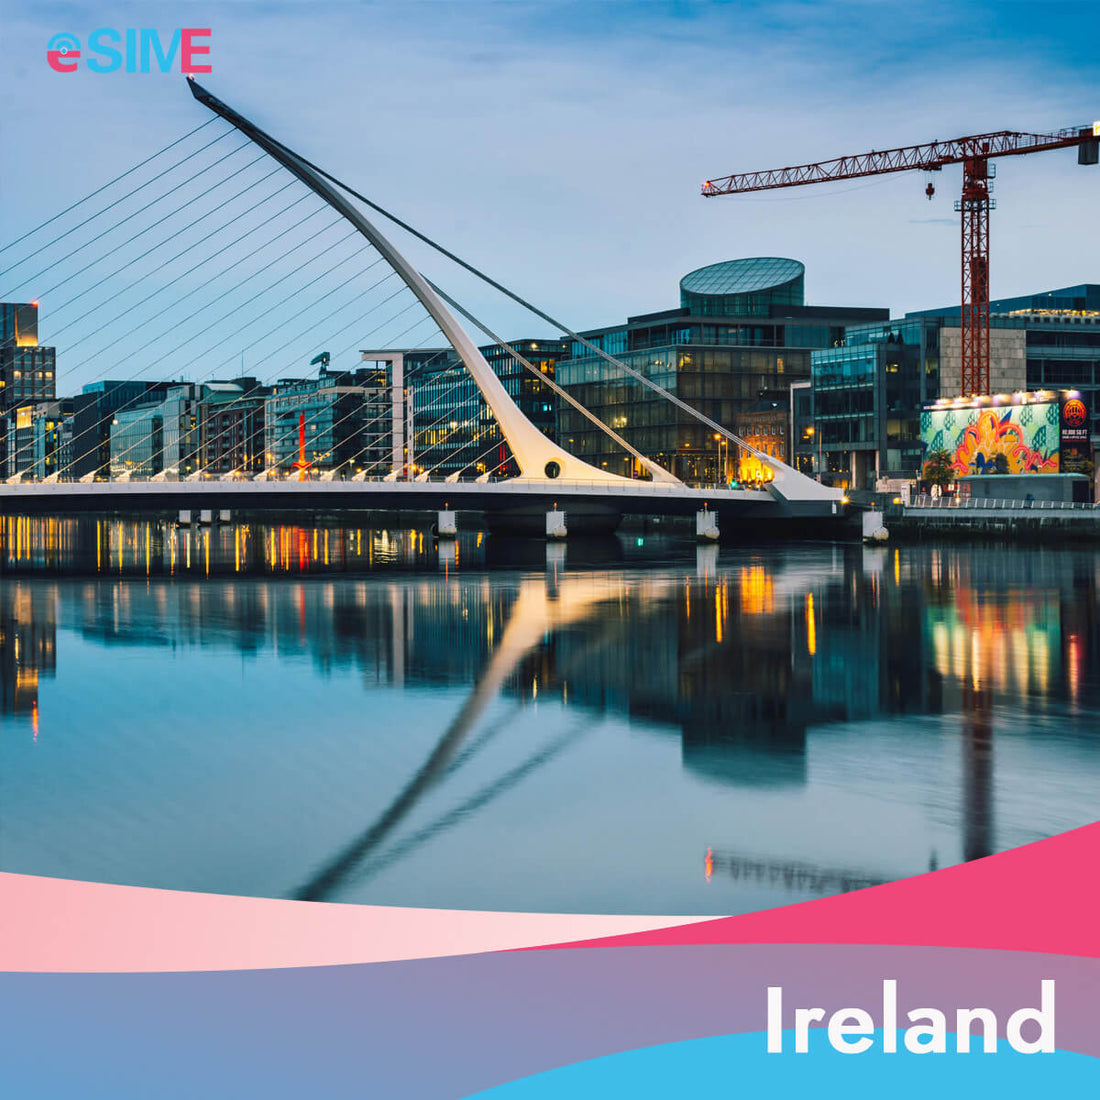 eSIM 1GB Data per Day for Traveling in Ireland